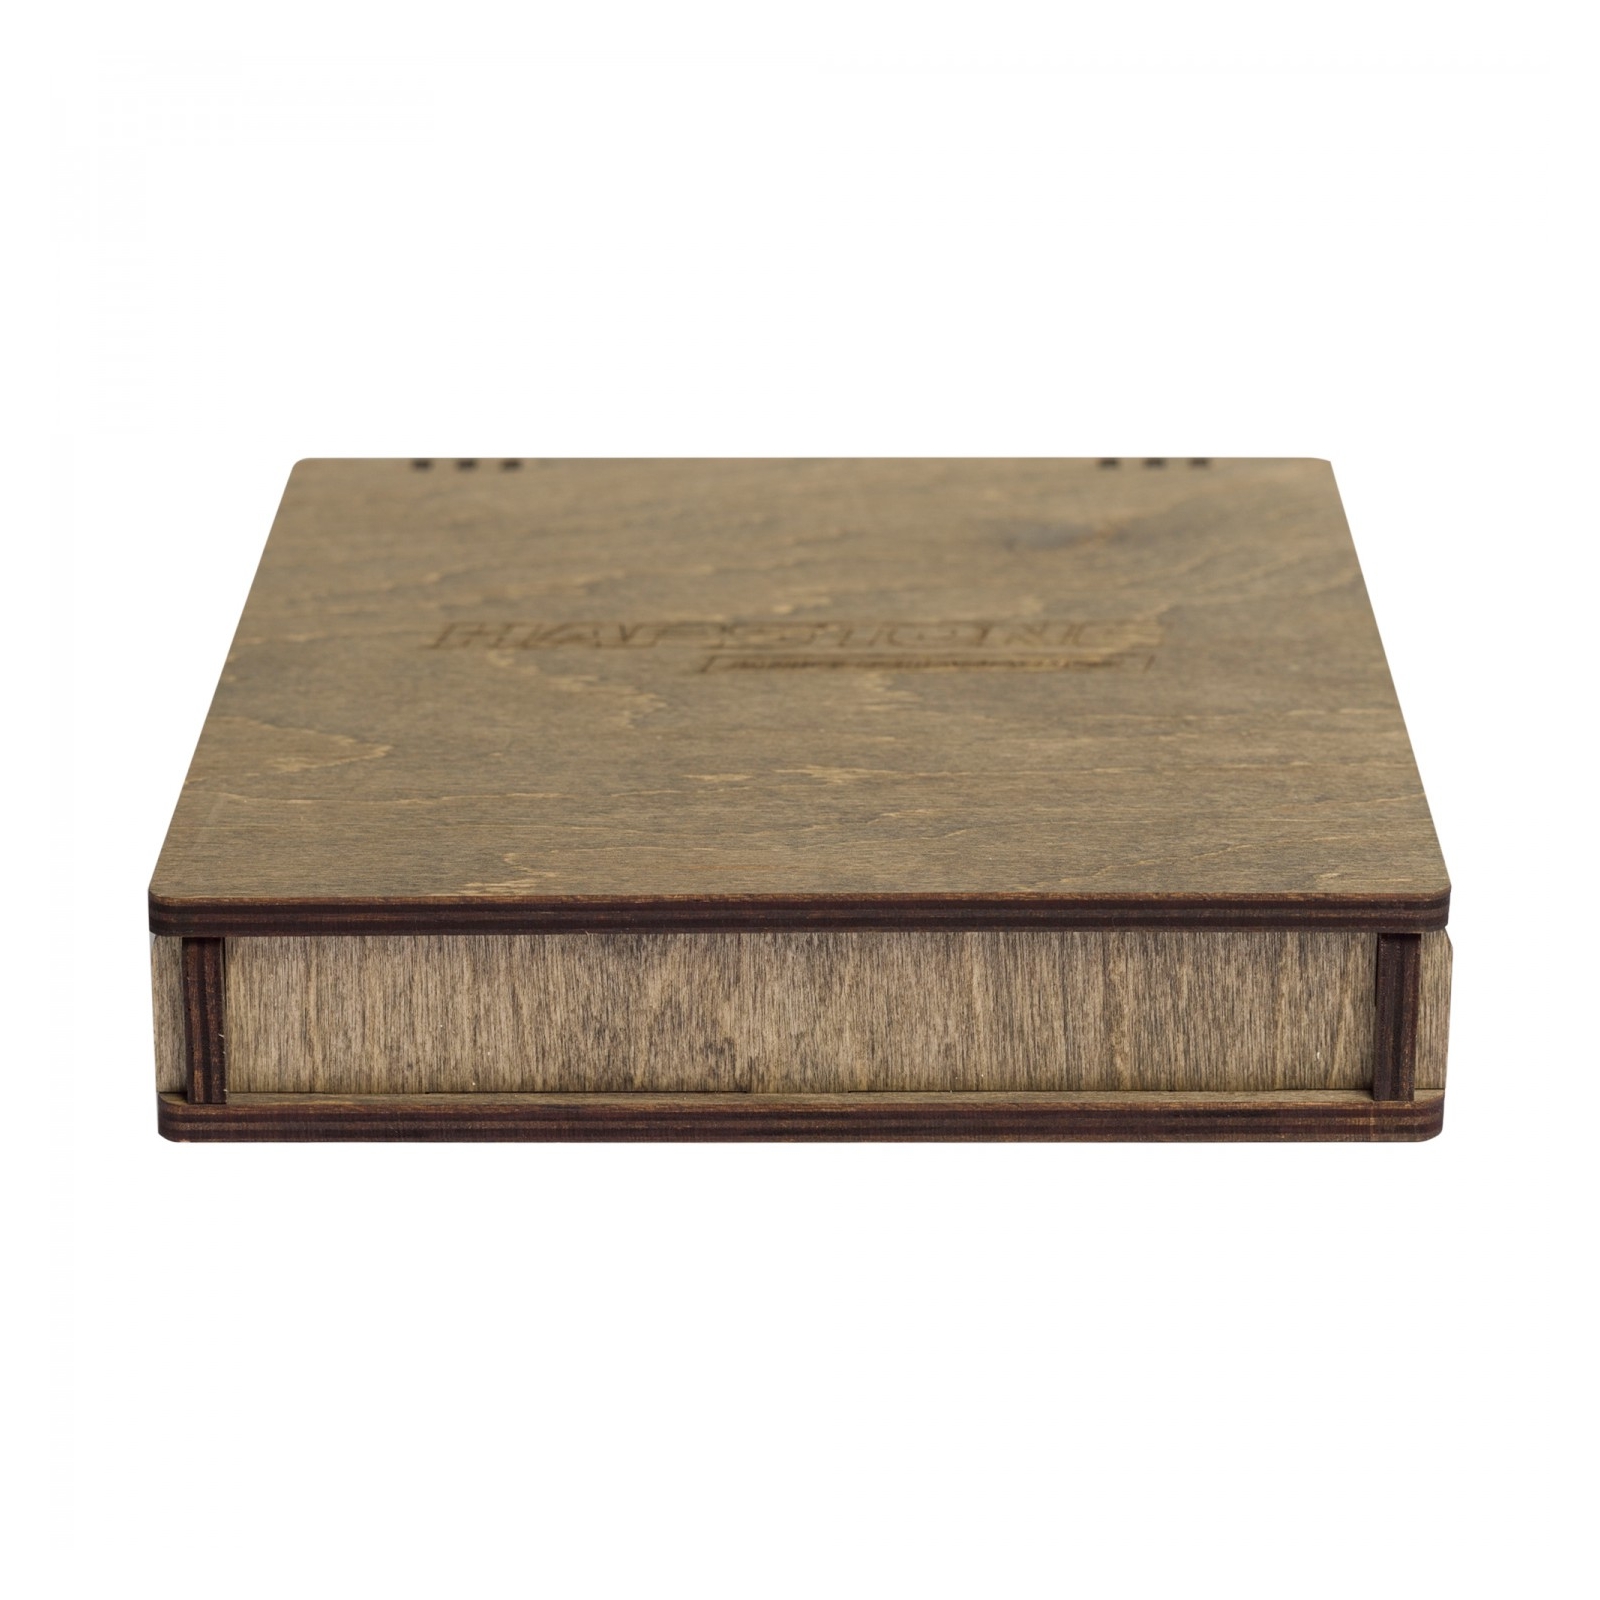 3Plywood storage case for 6 stones-1500x1500.jpg